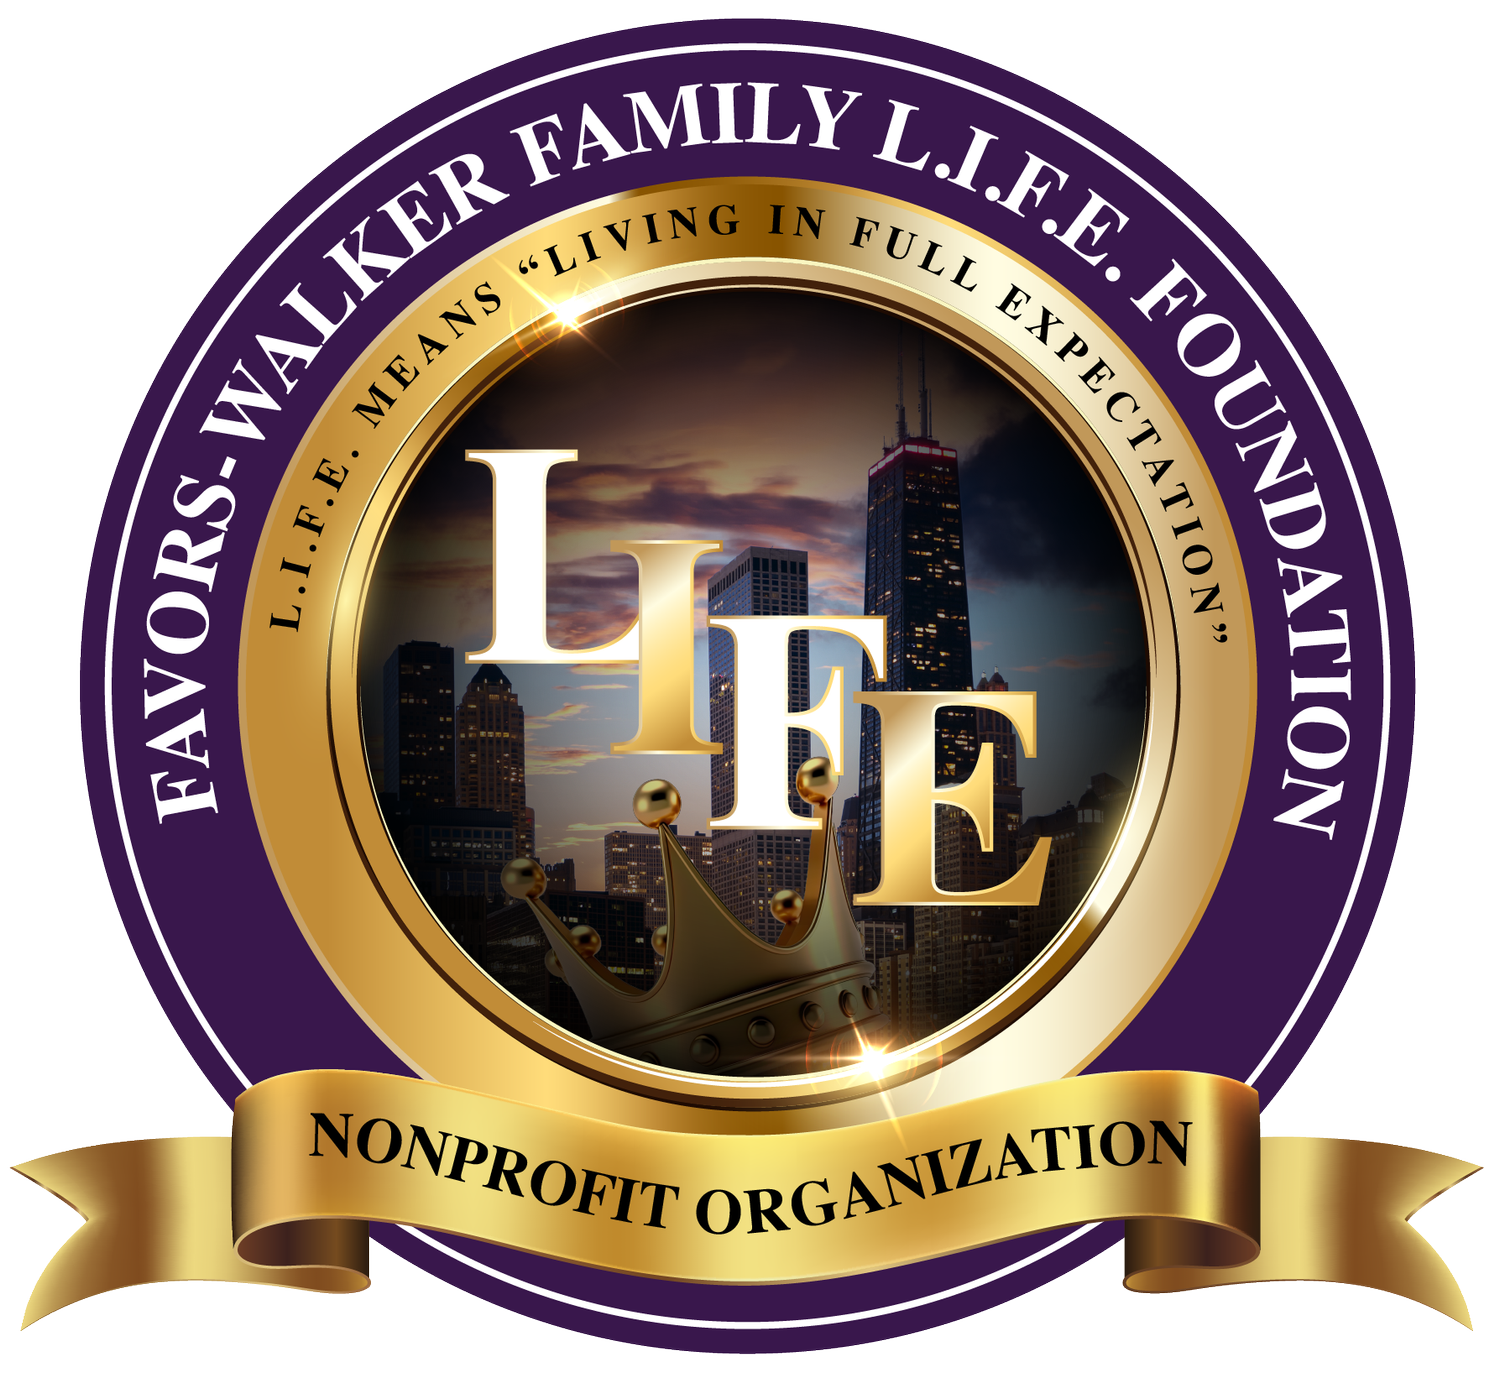 Favors-Walker Family LIFE Foundation | Nonprofit Community-Based Organization